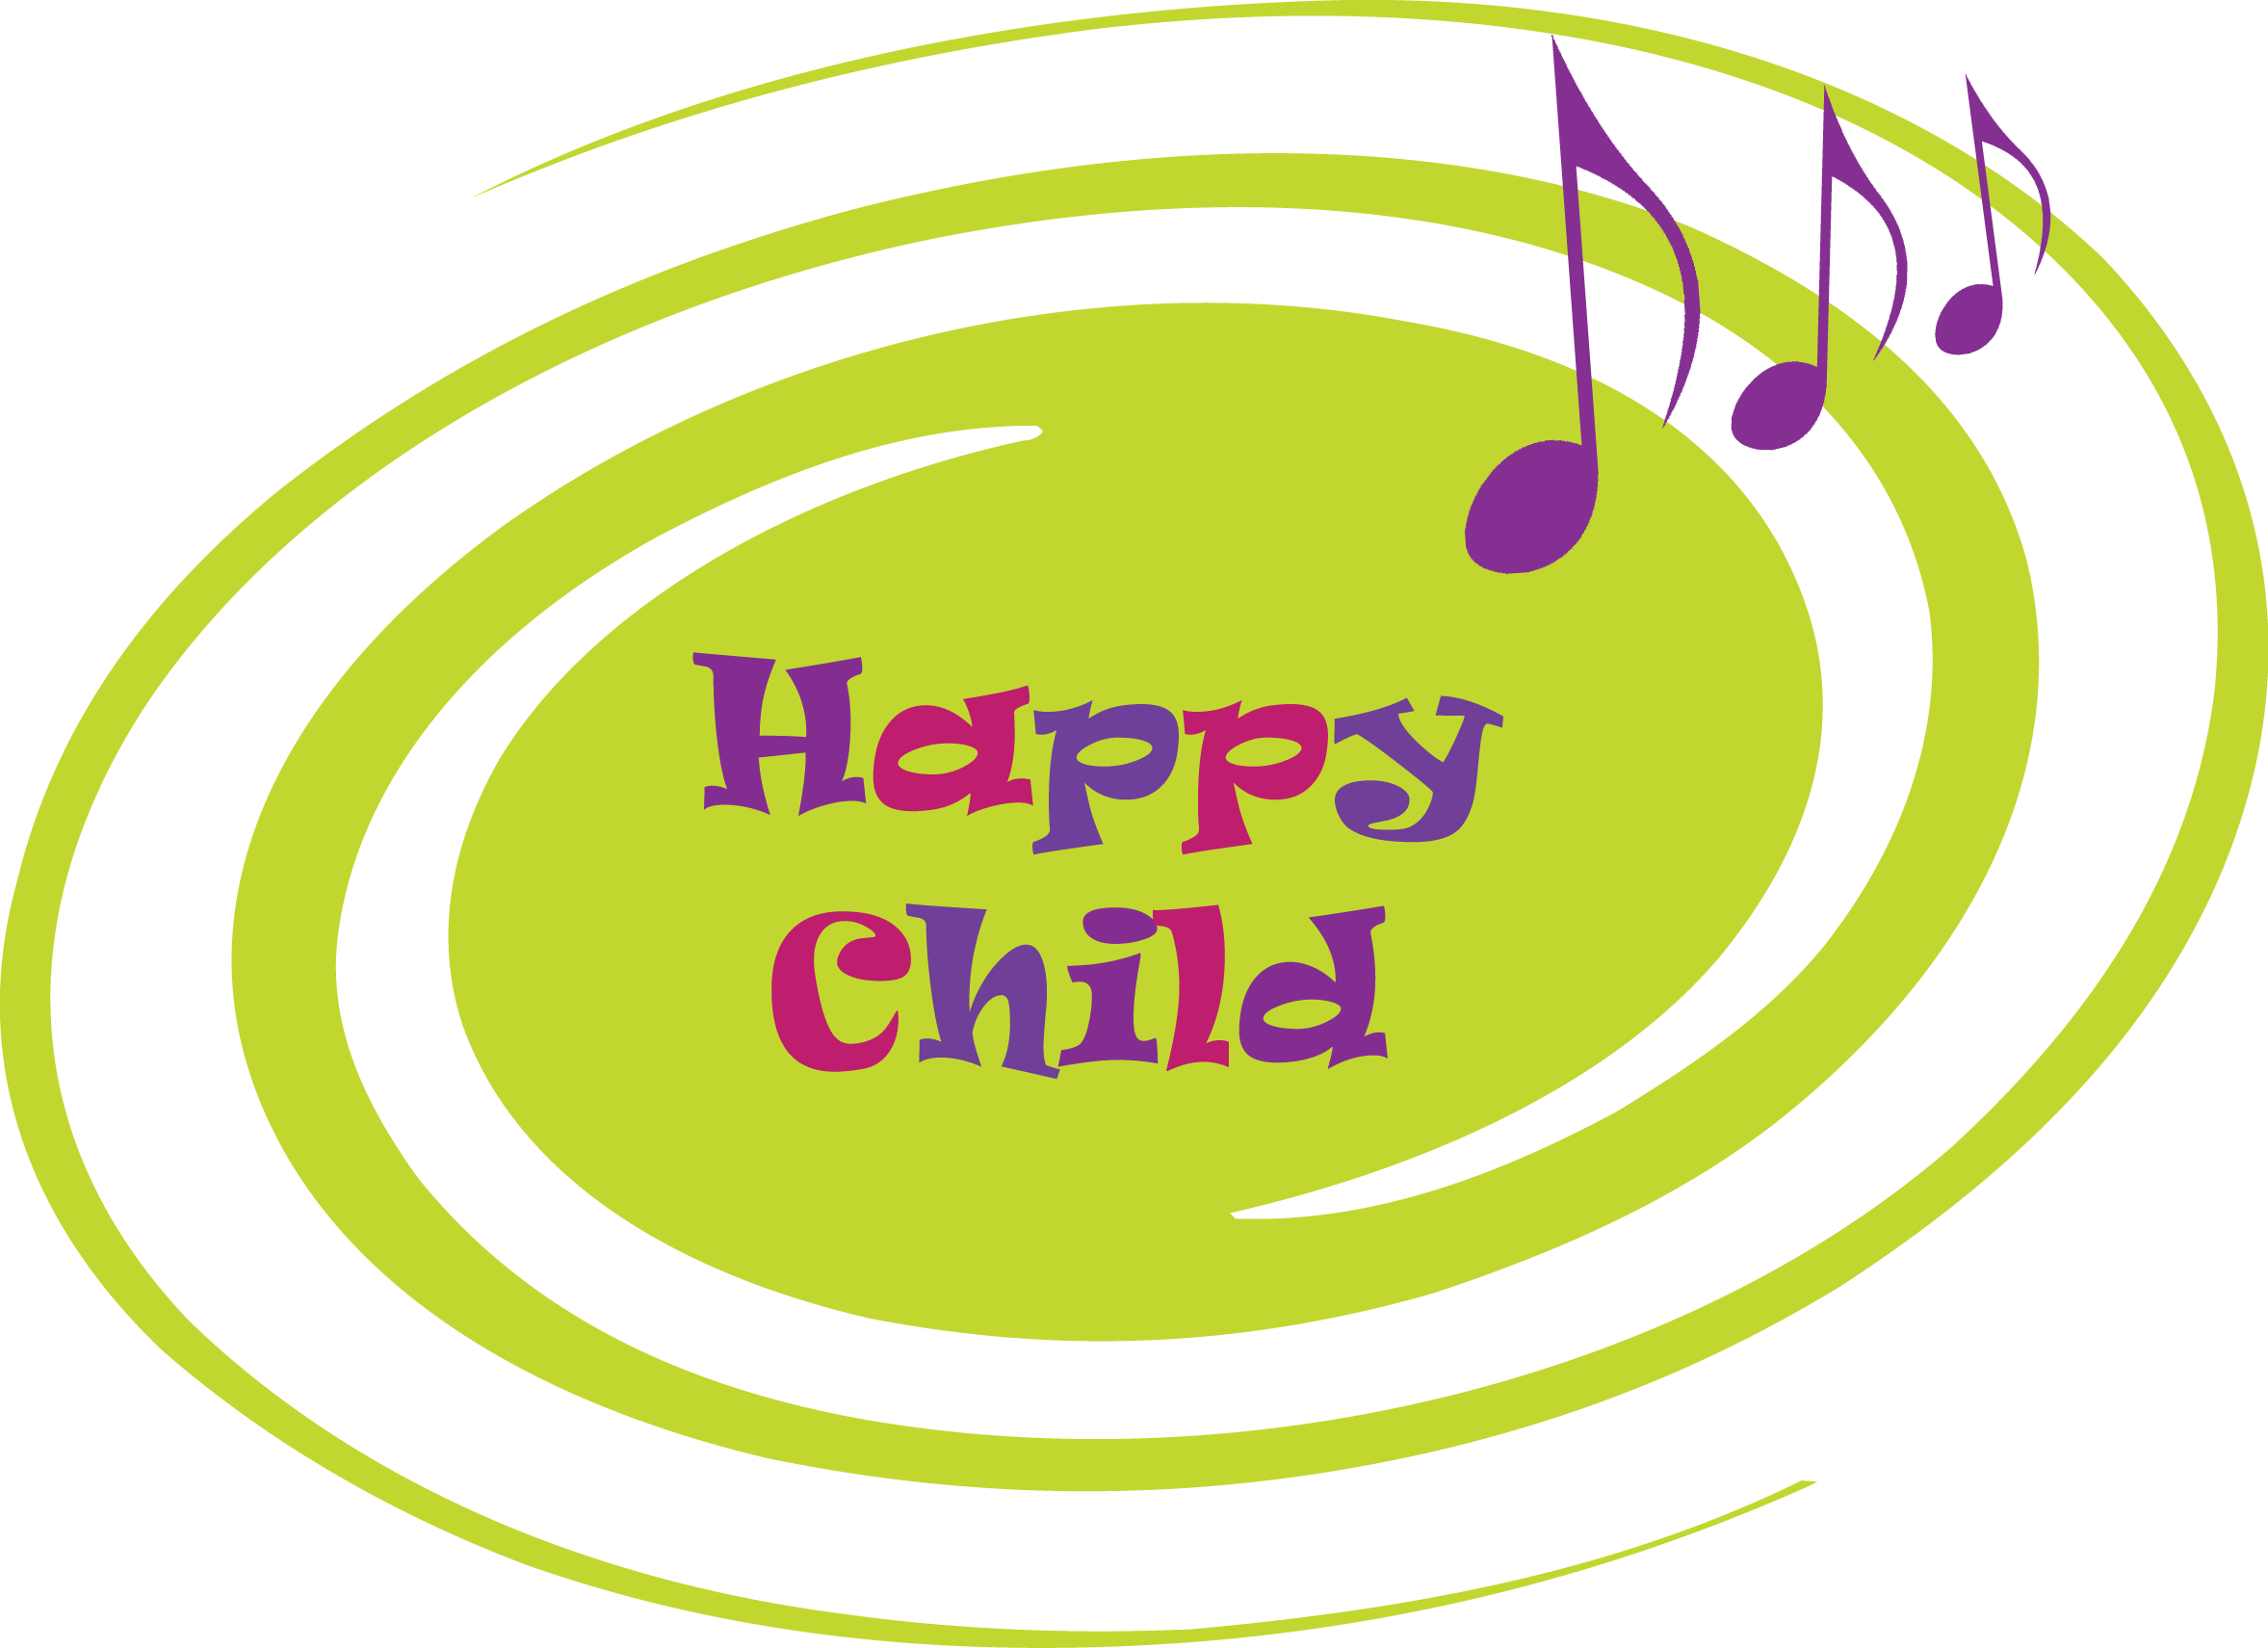 Course Image "Happy Child" angļu valodas apguve